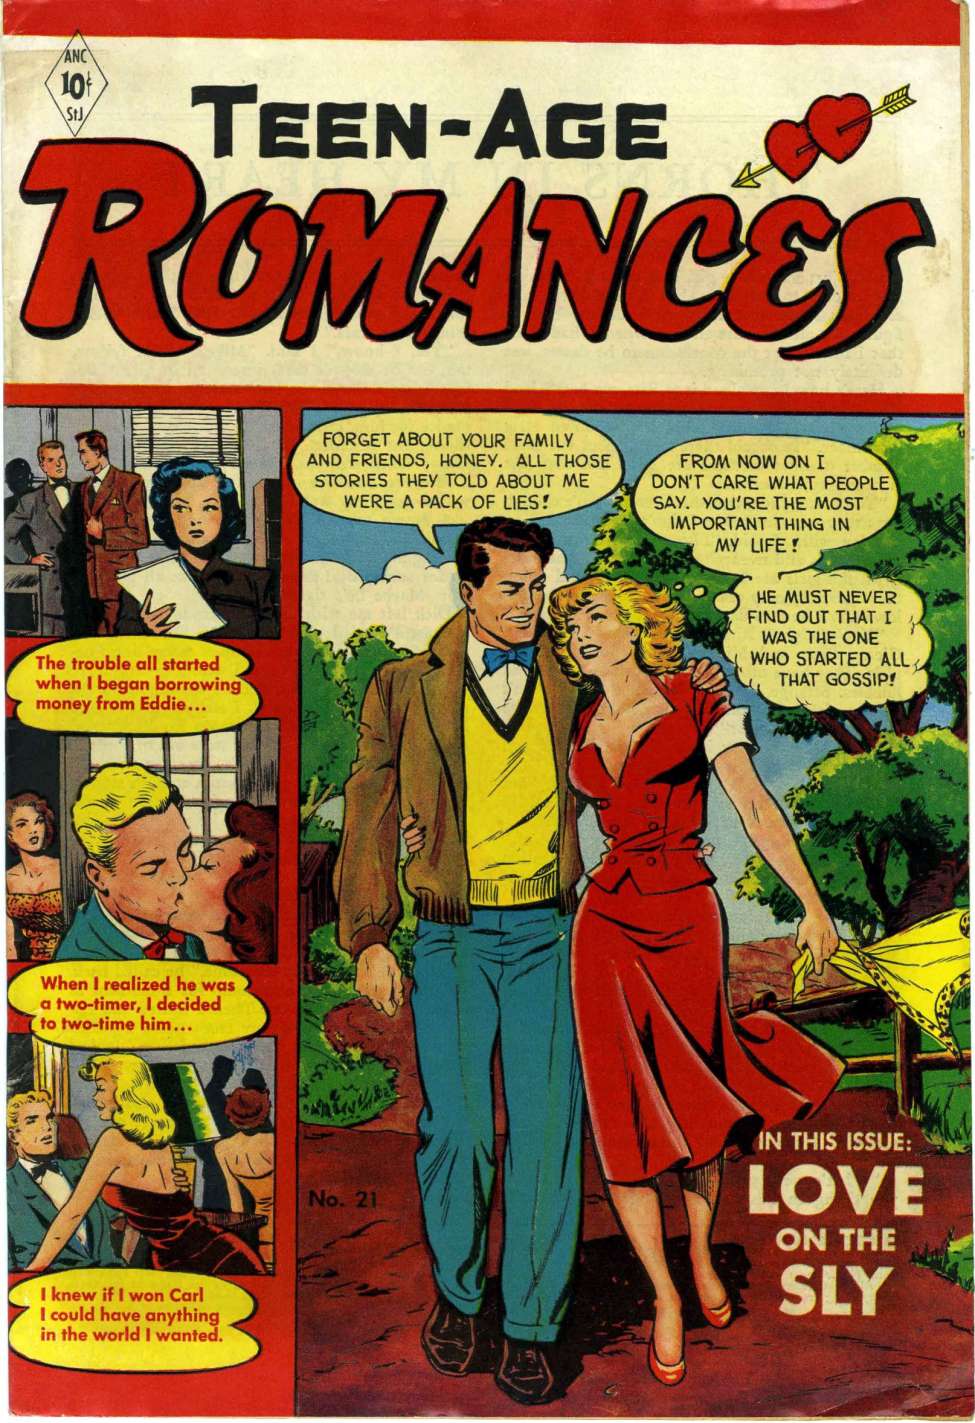 Teen-Age Romances #21 by St. John